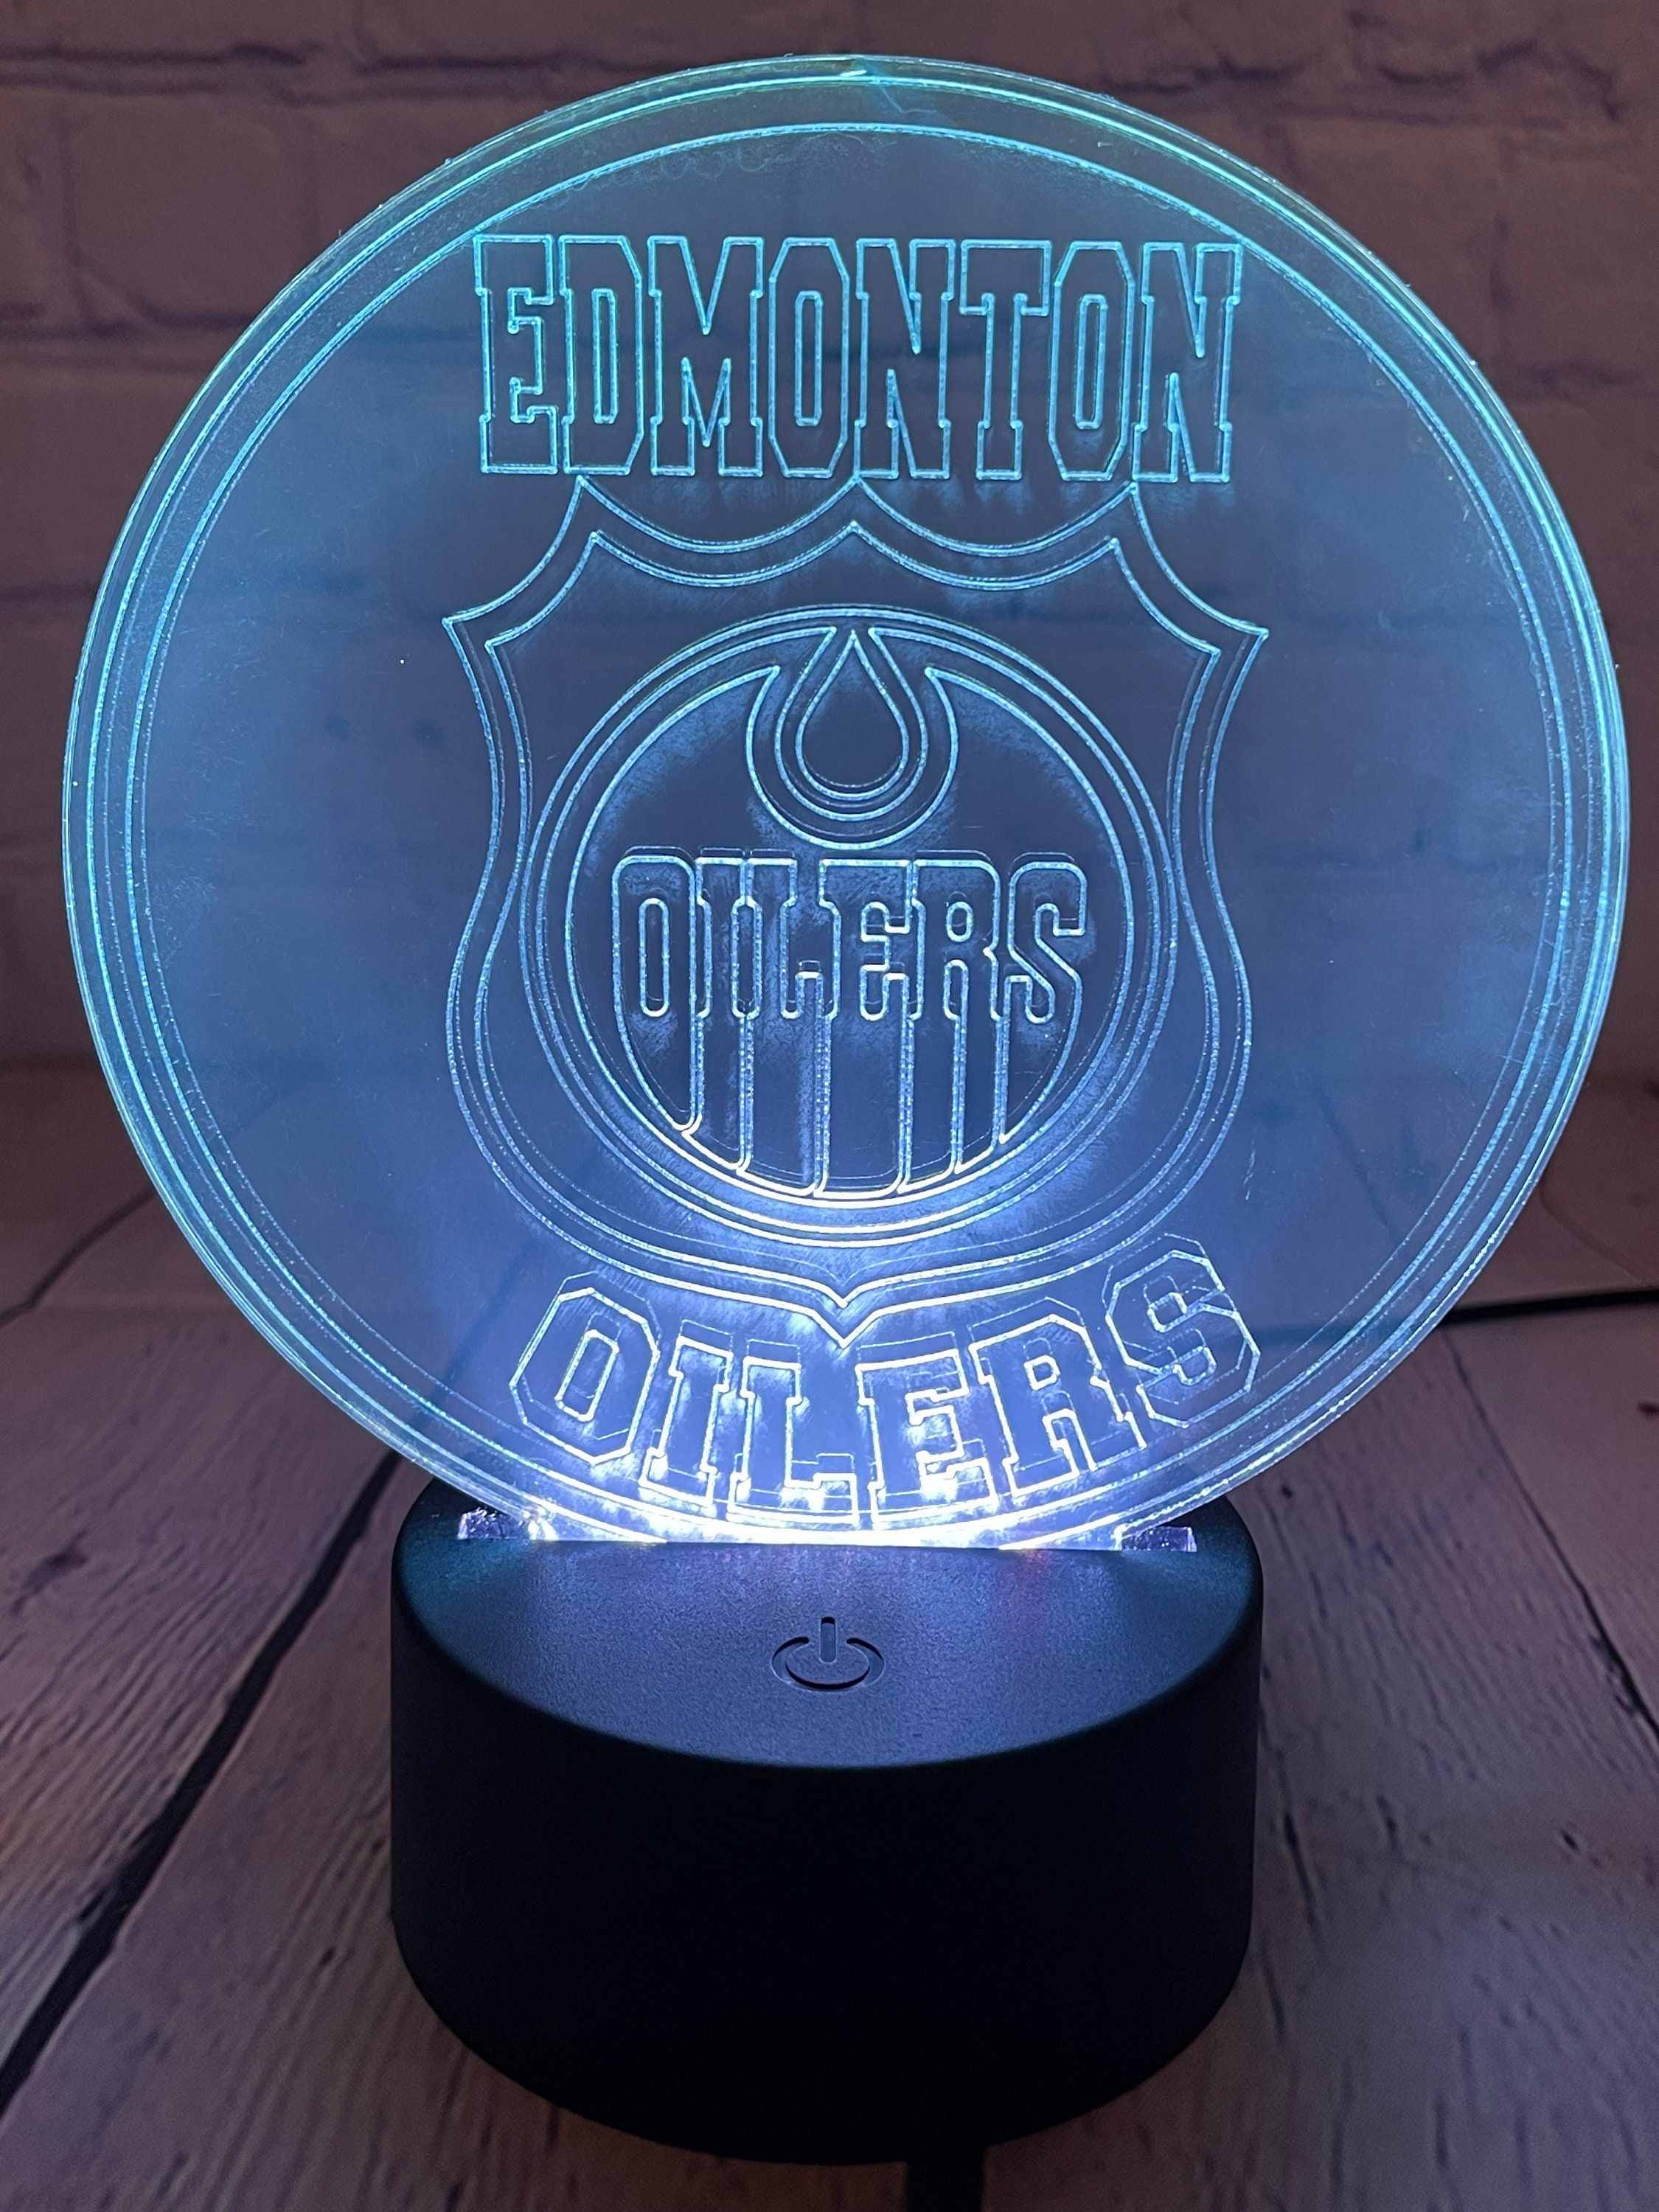 Edmonton Oilers Gear Retro NHL T-Shirt Sweatshirt Hoodie Gifts for Fans -  Bluefink